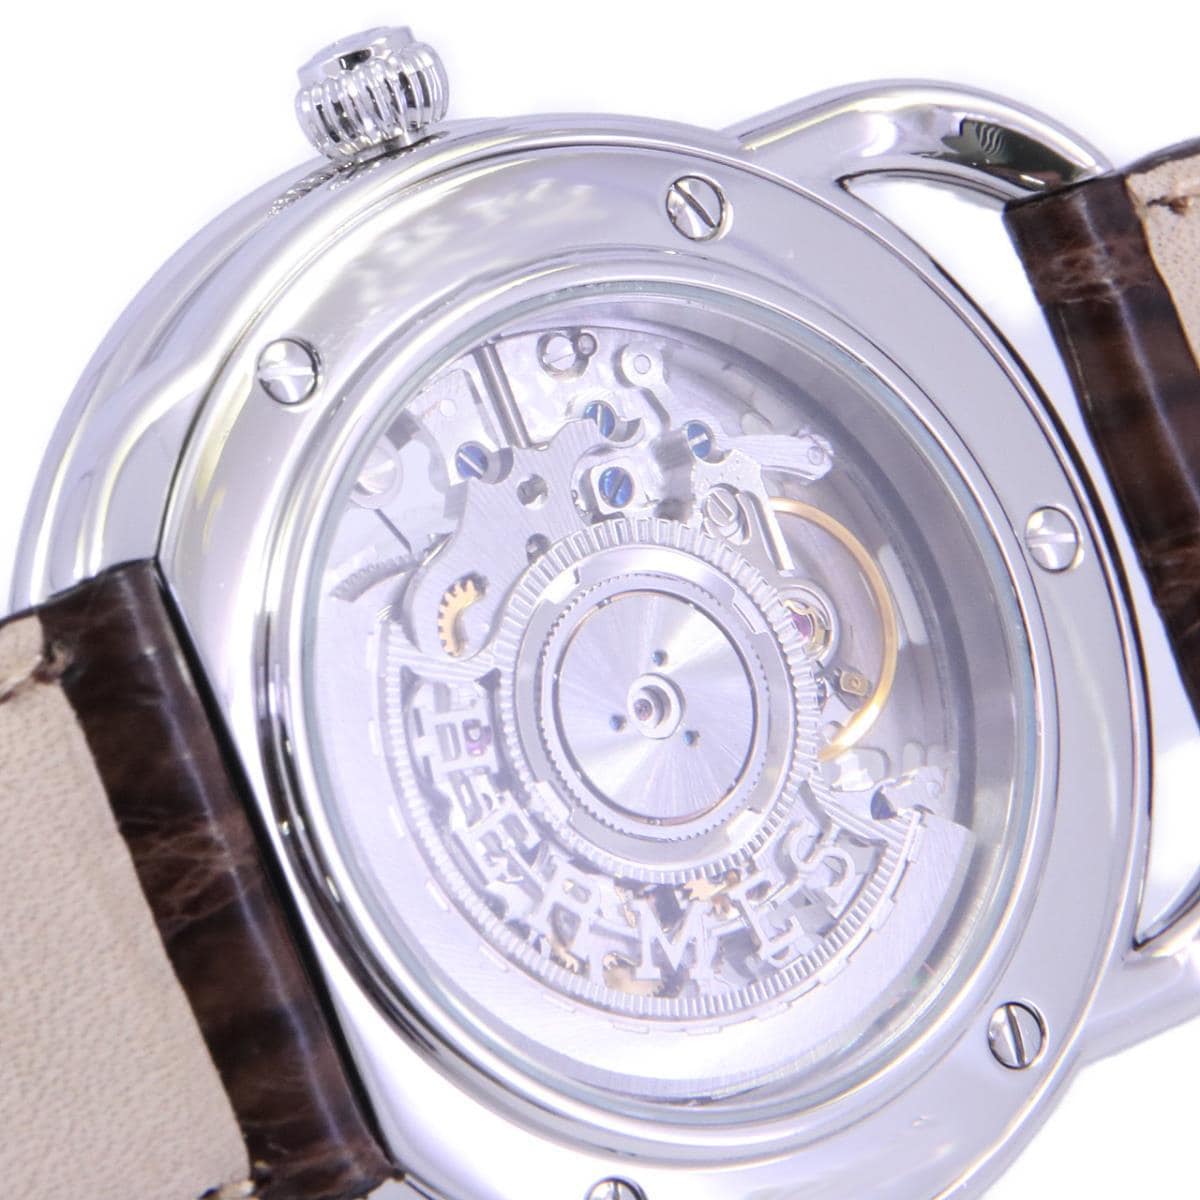 【115654】HERMES エルメス  AR6.710 アルソースケルトン スケルトンダイヤル SS/レザー 自動巻き 保証書 純正ボックス 腕時計 時計 WATCH メンズ 男性 男 紳士